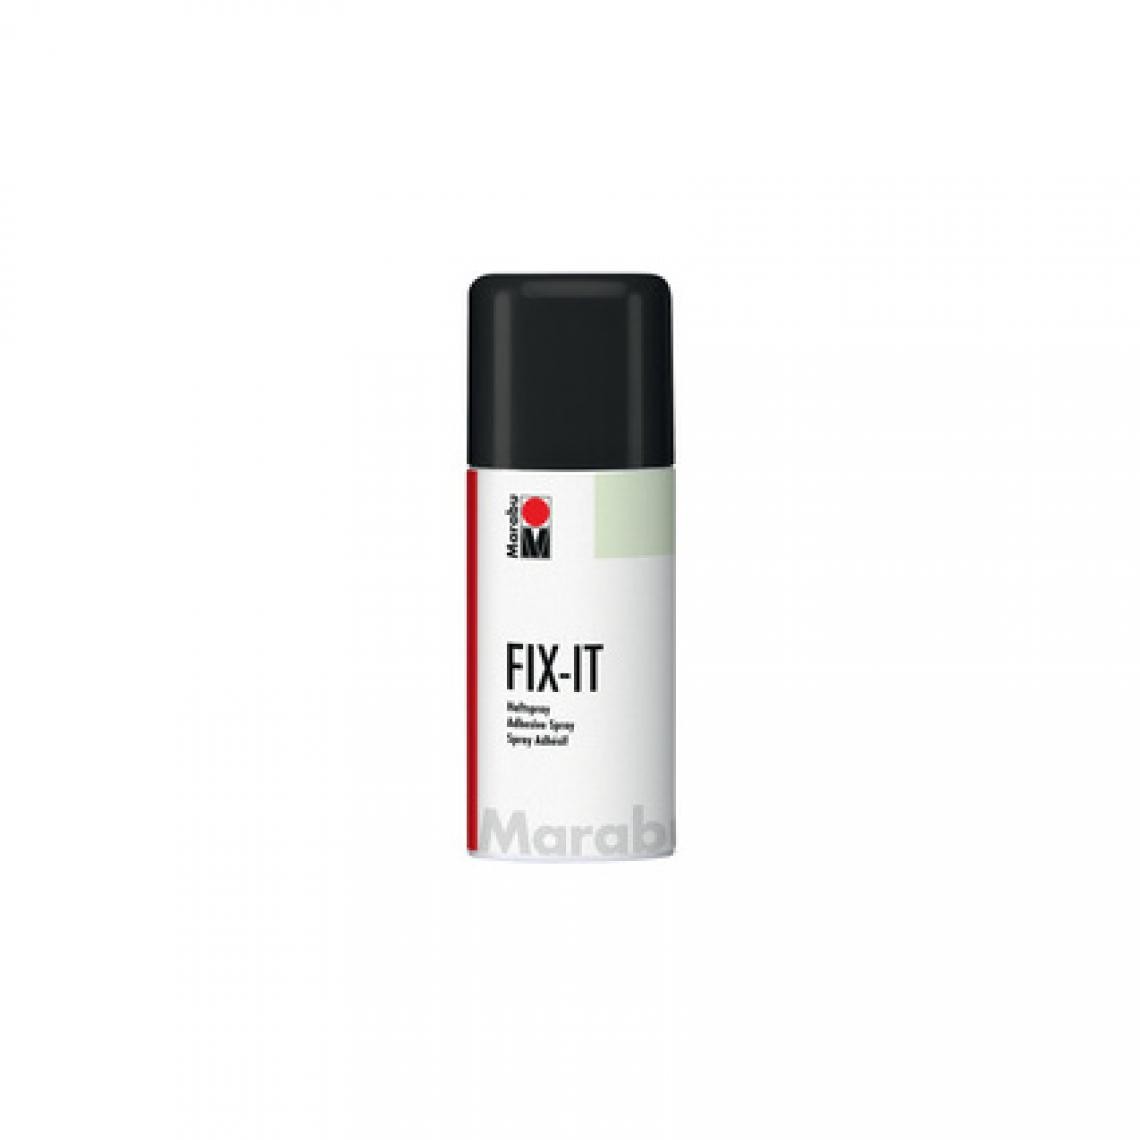 Marabu - Marabu Spray adhésif 'Fix-it', bombe de 150 ml () - Colles et pistolets à colle